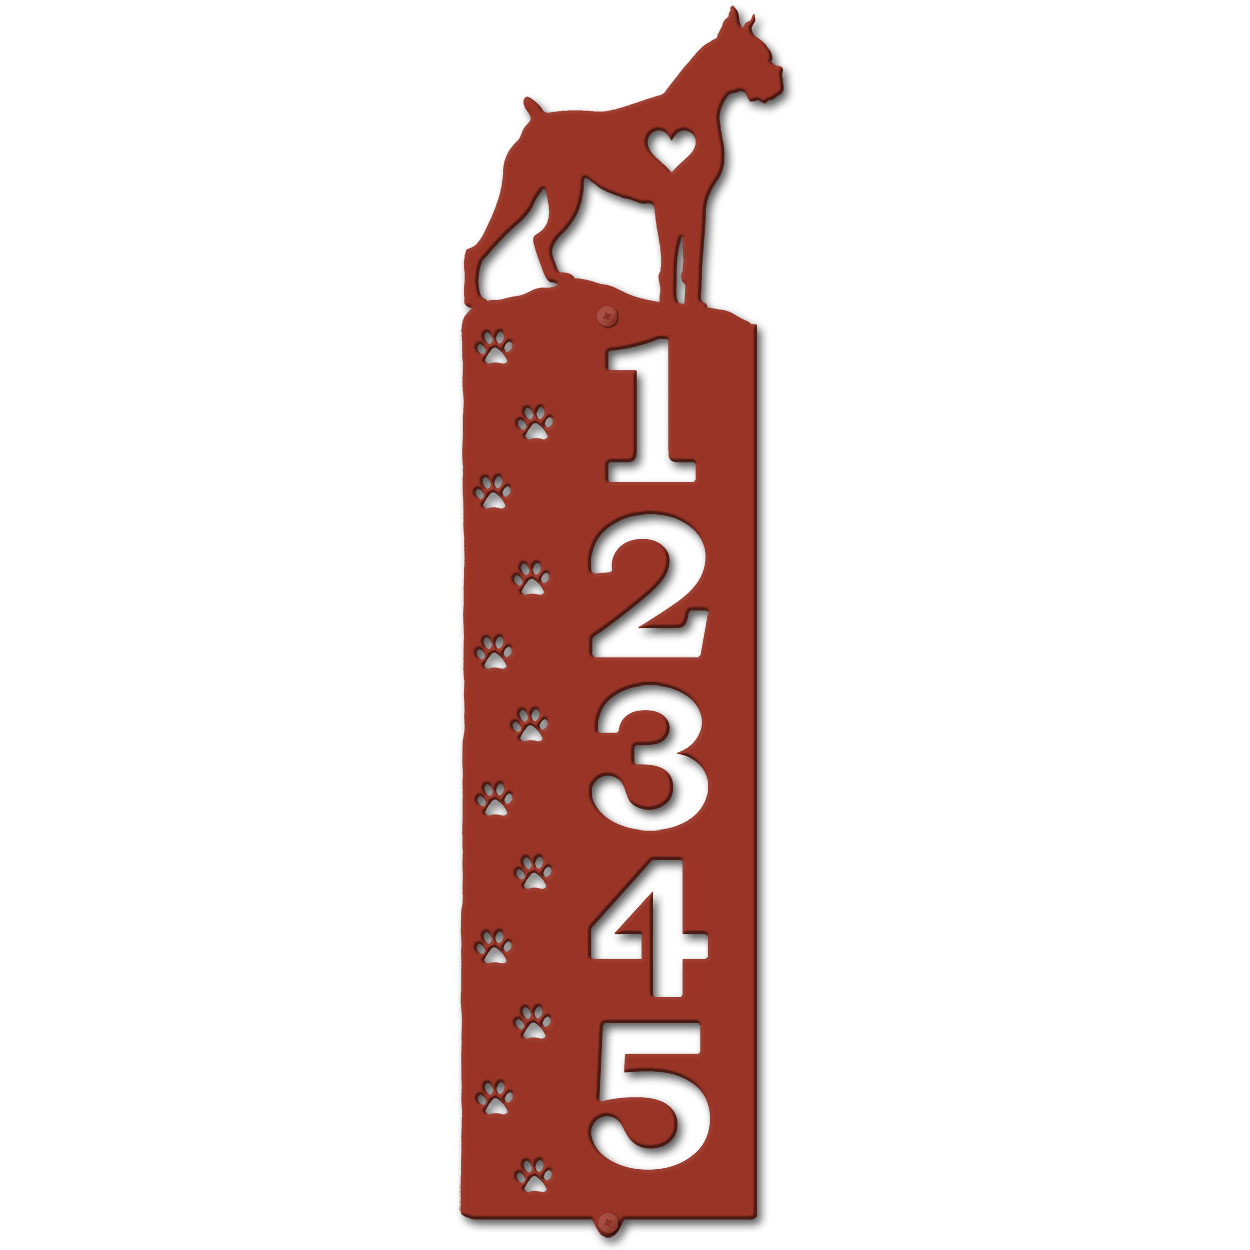 636165 - Boxer Cut-Outs Five Digit Address Number Plaque - Choose Size and Color